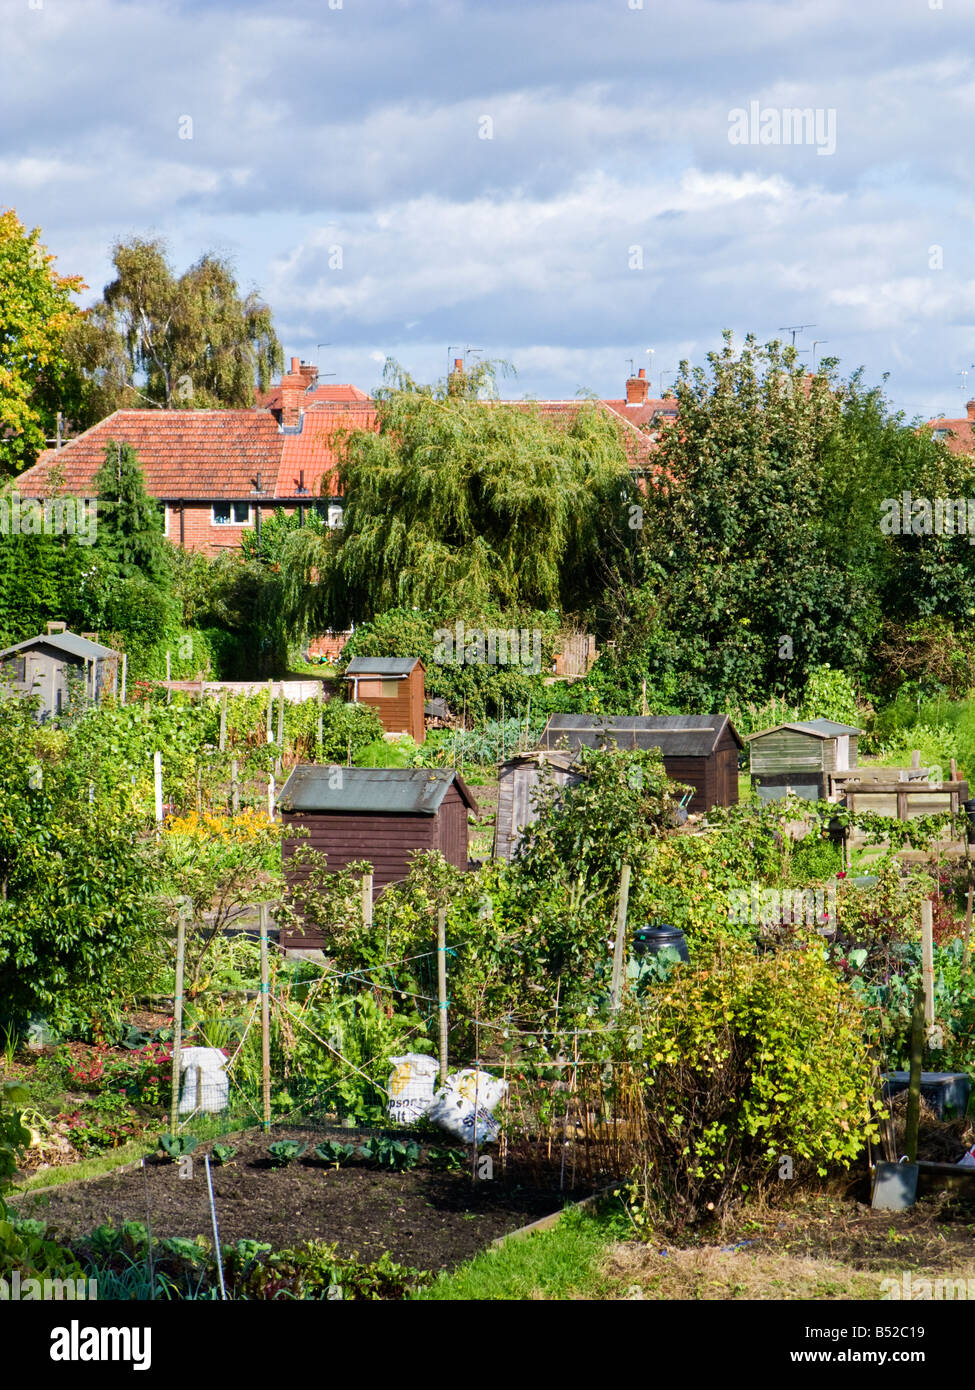 Allotments, gardening plots and sheds, England, UK Stock Photo